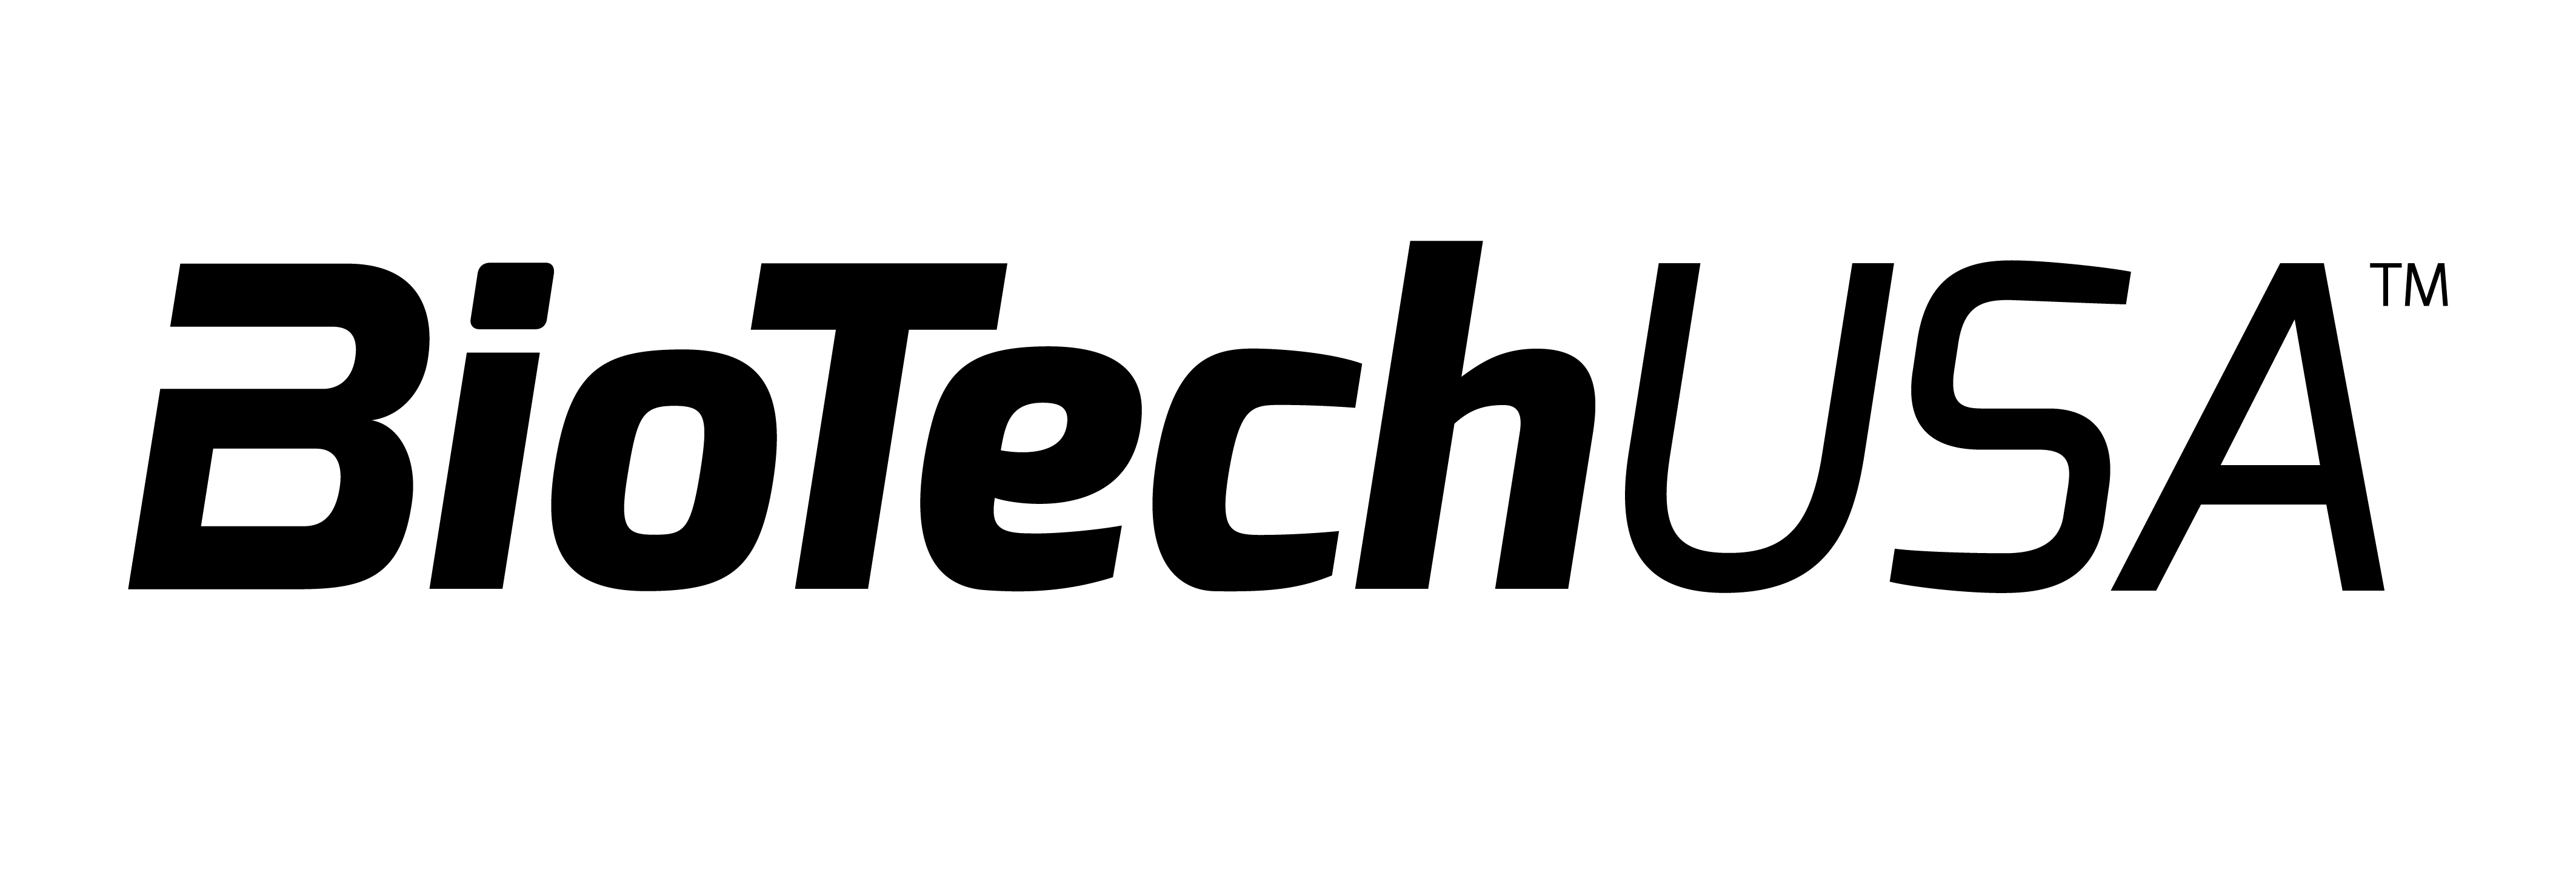 Logo de biotech